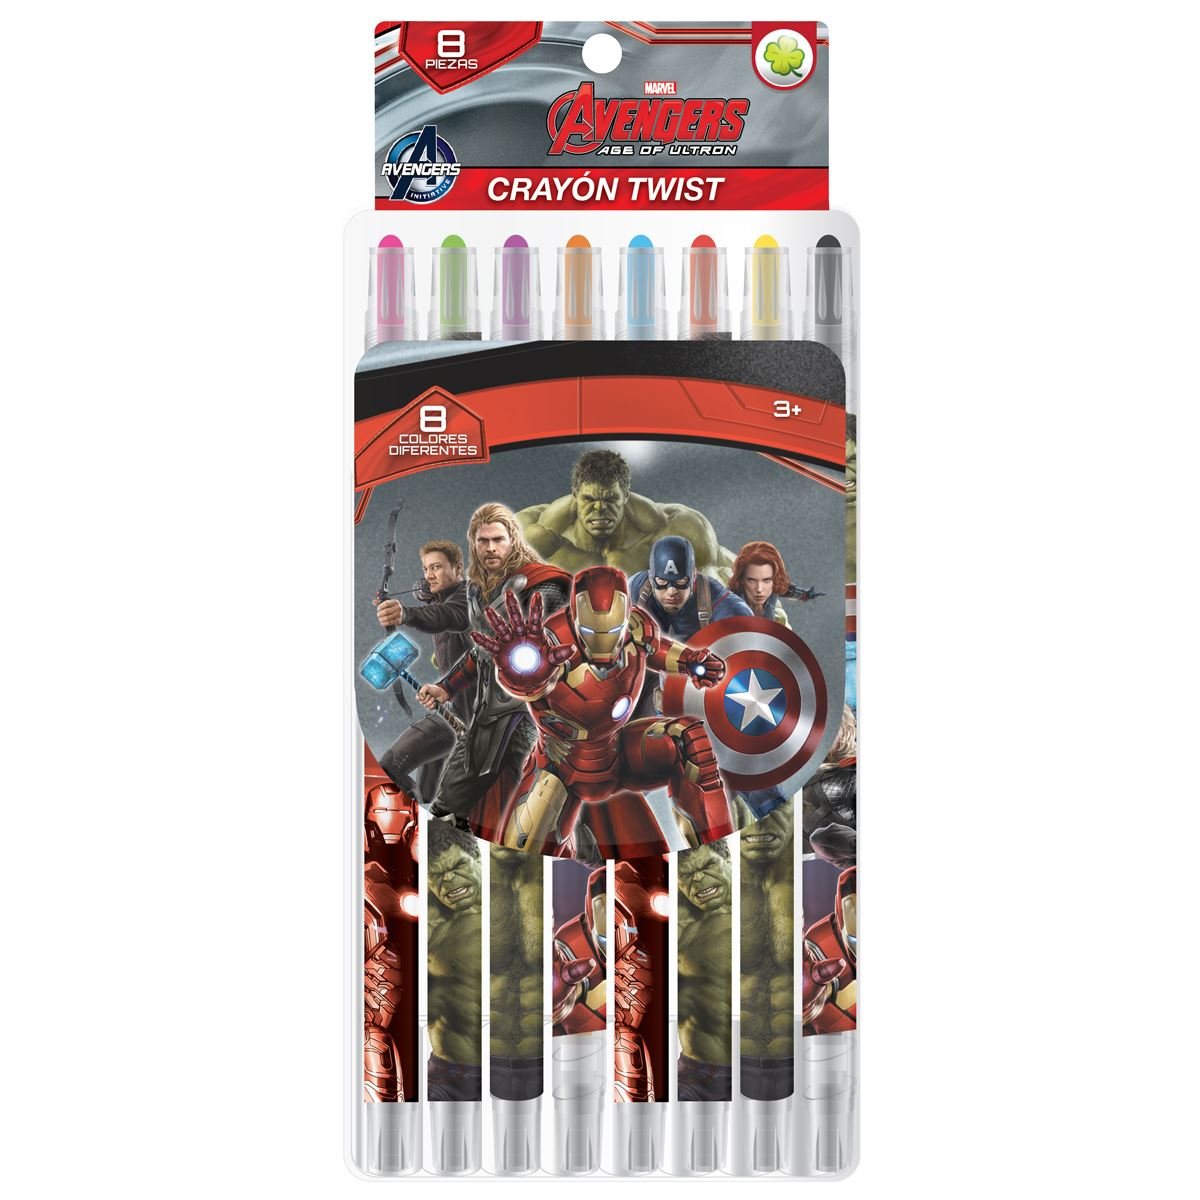 Crayon Twist Avengers